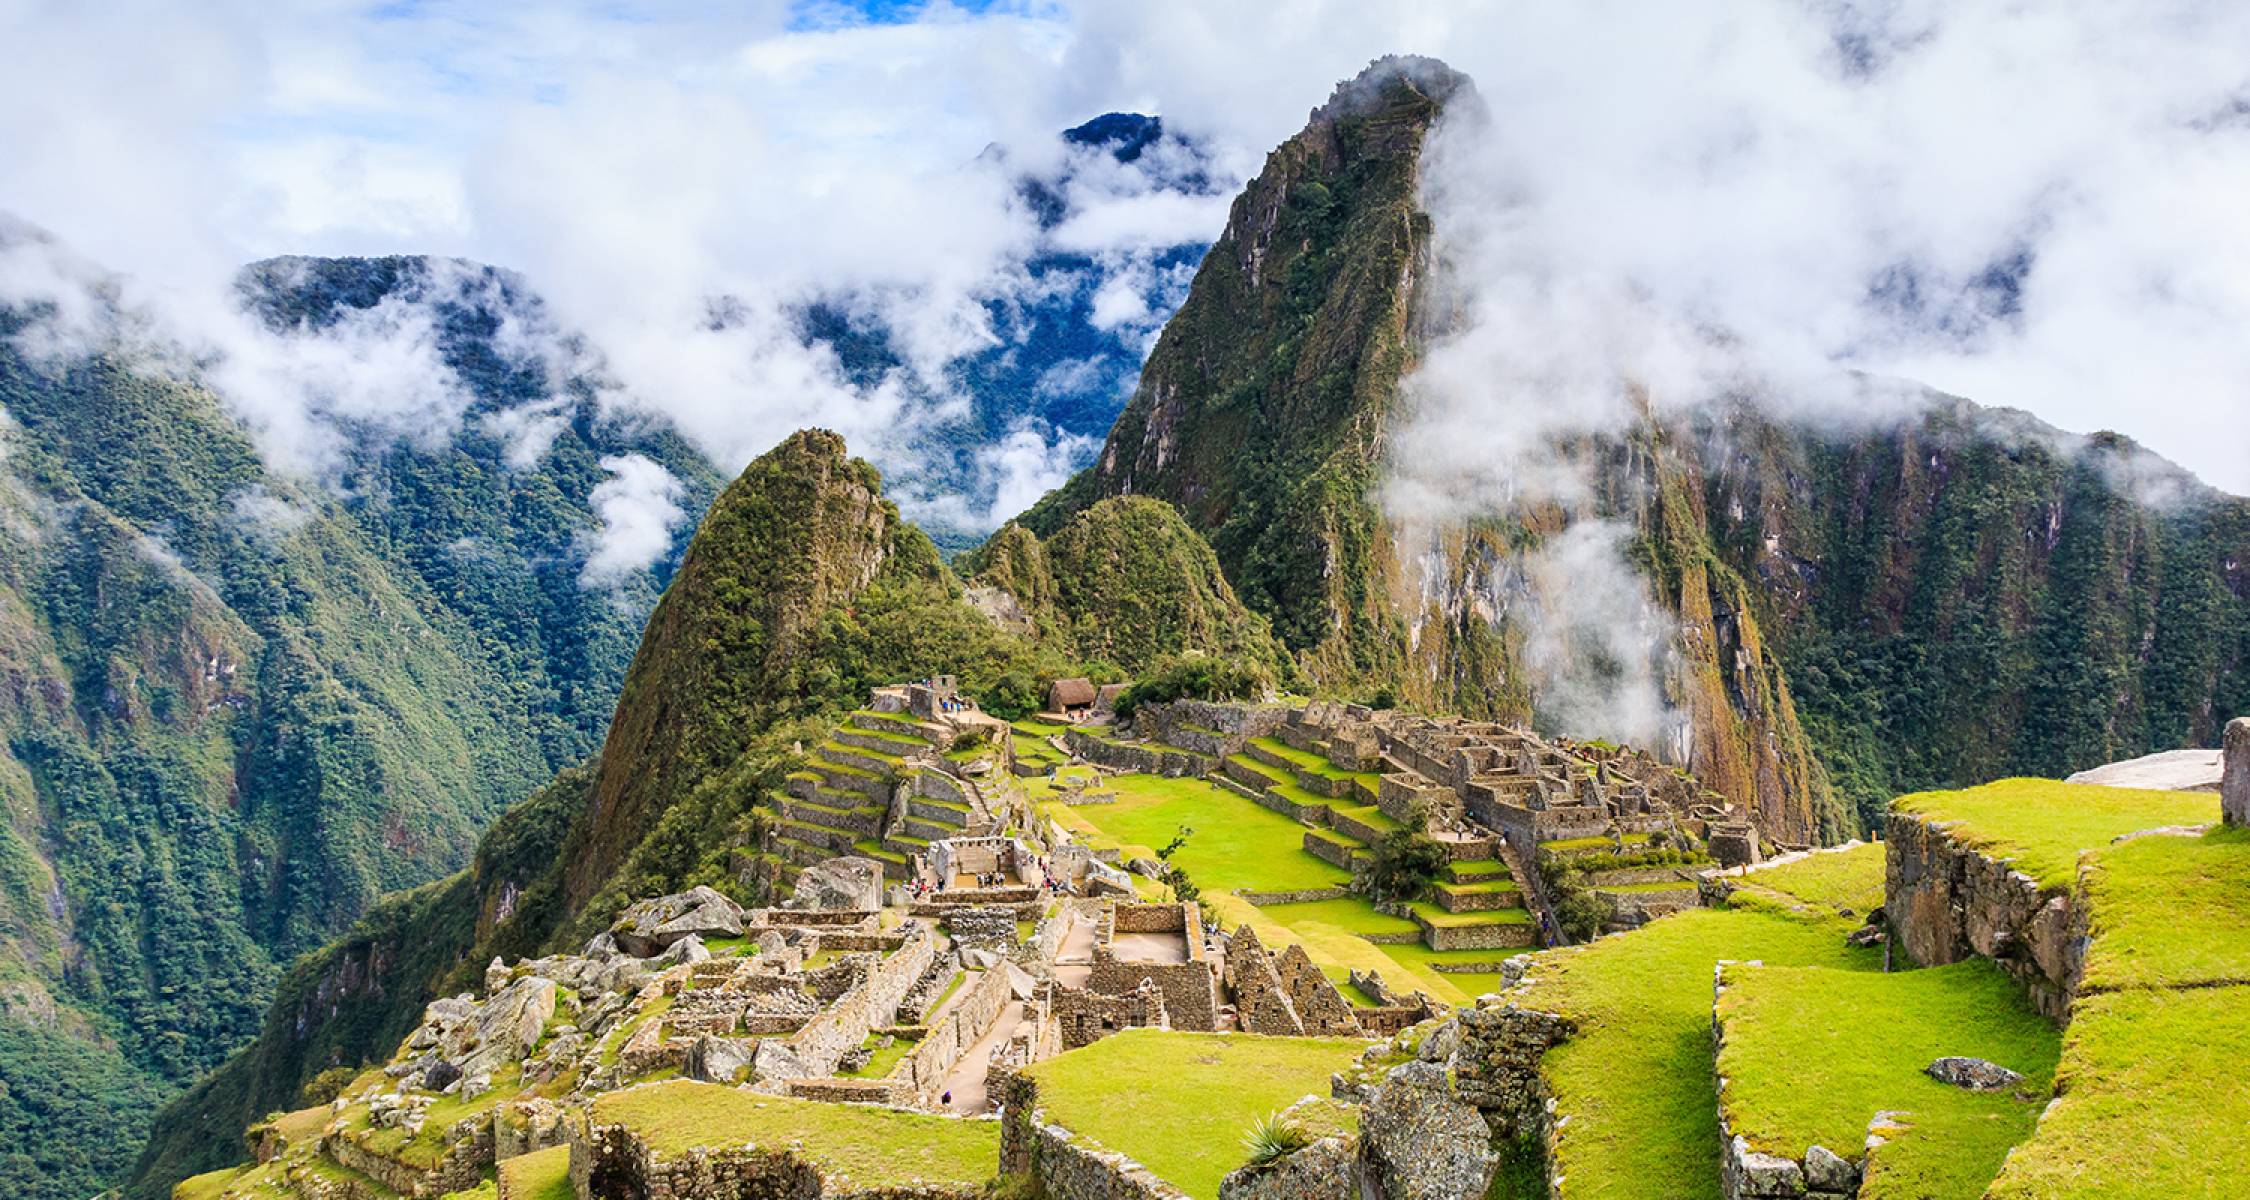 Machu Picchu by Train 2020 - 9 days, Peru | Byond Travel